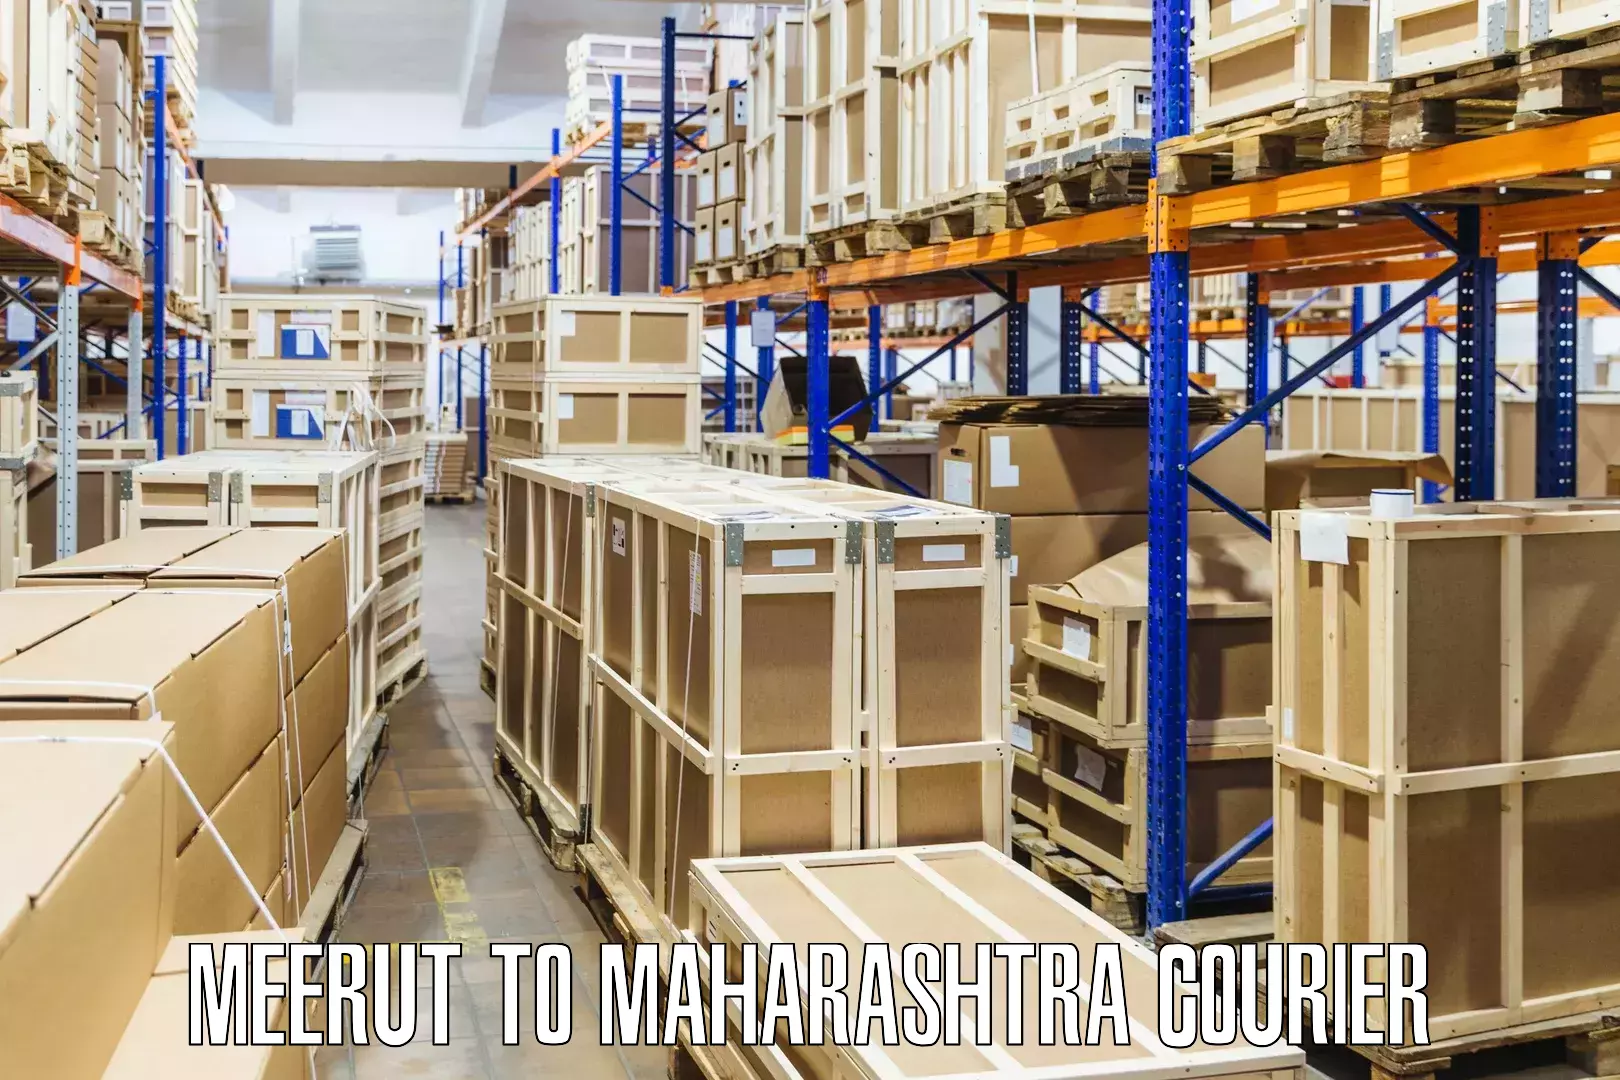 Advanced shipping network Meerut to Maharashtra